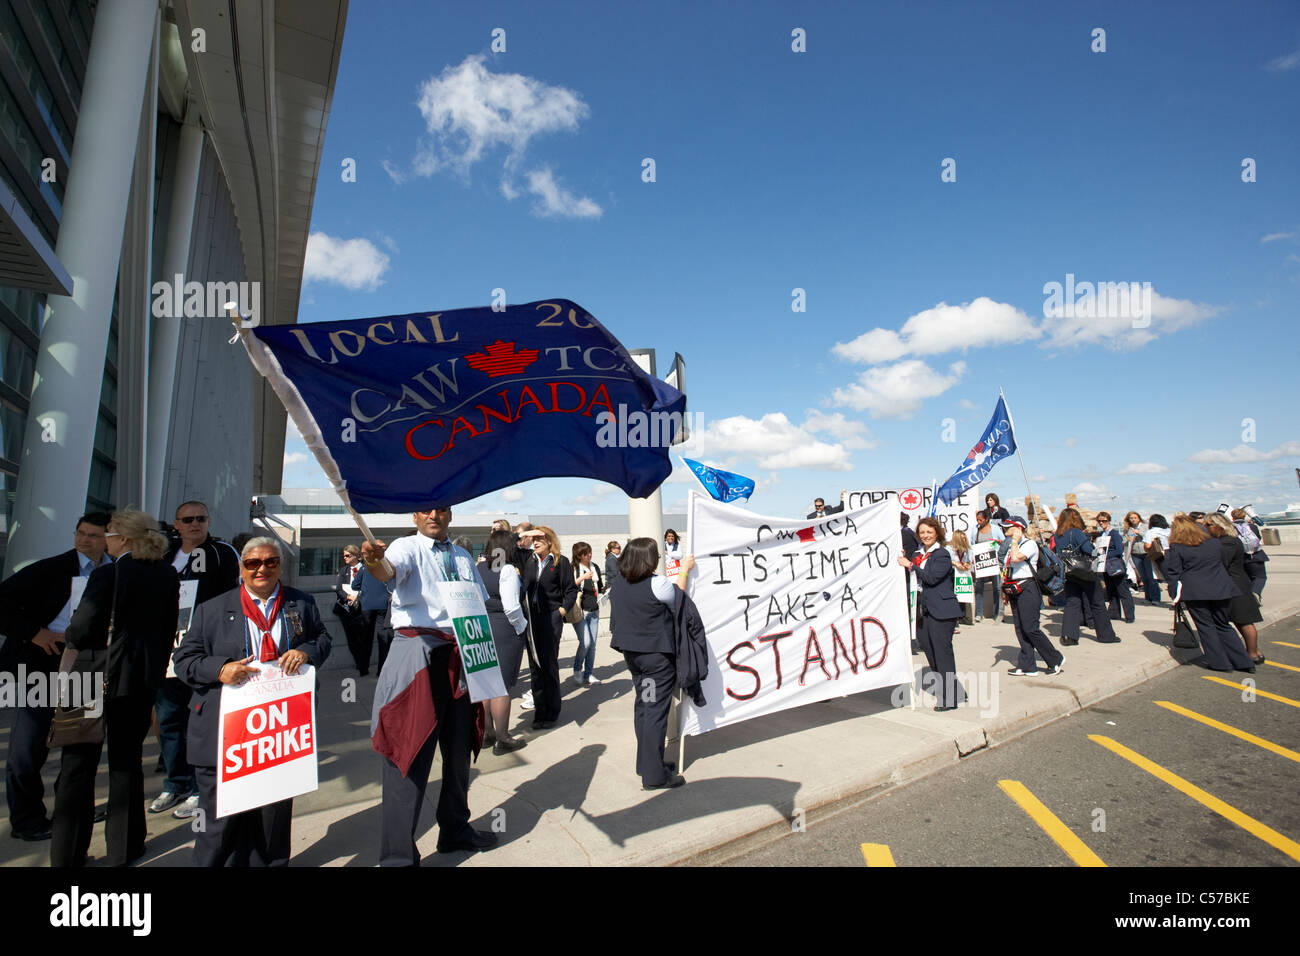 air canada staff on strike picketing Toronto Pearson International